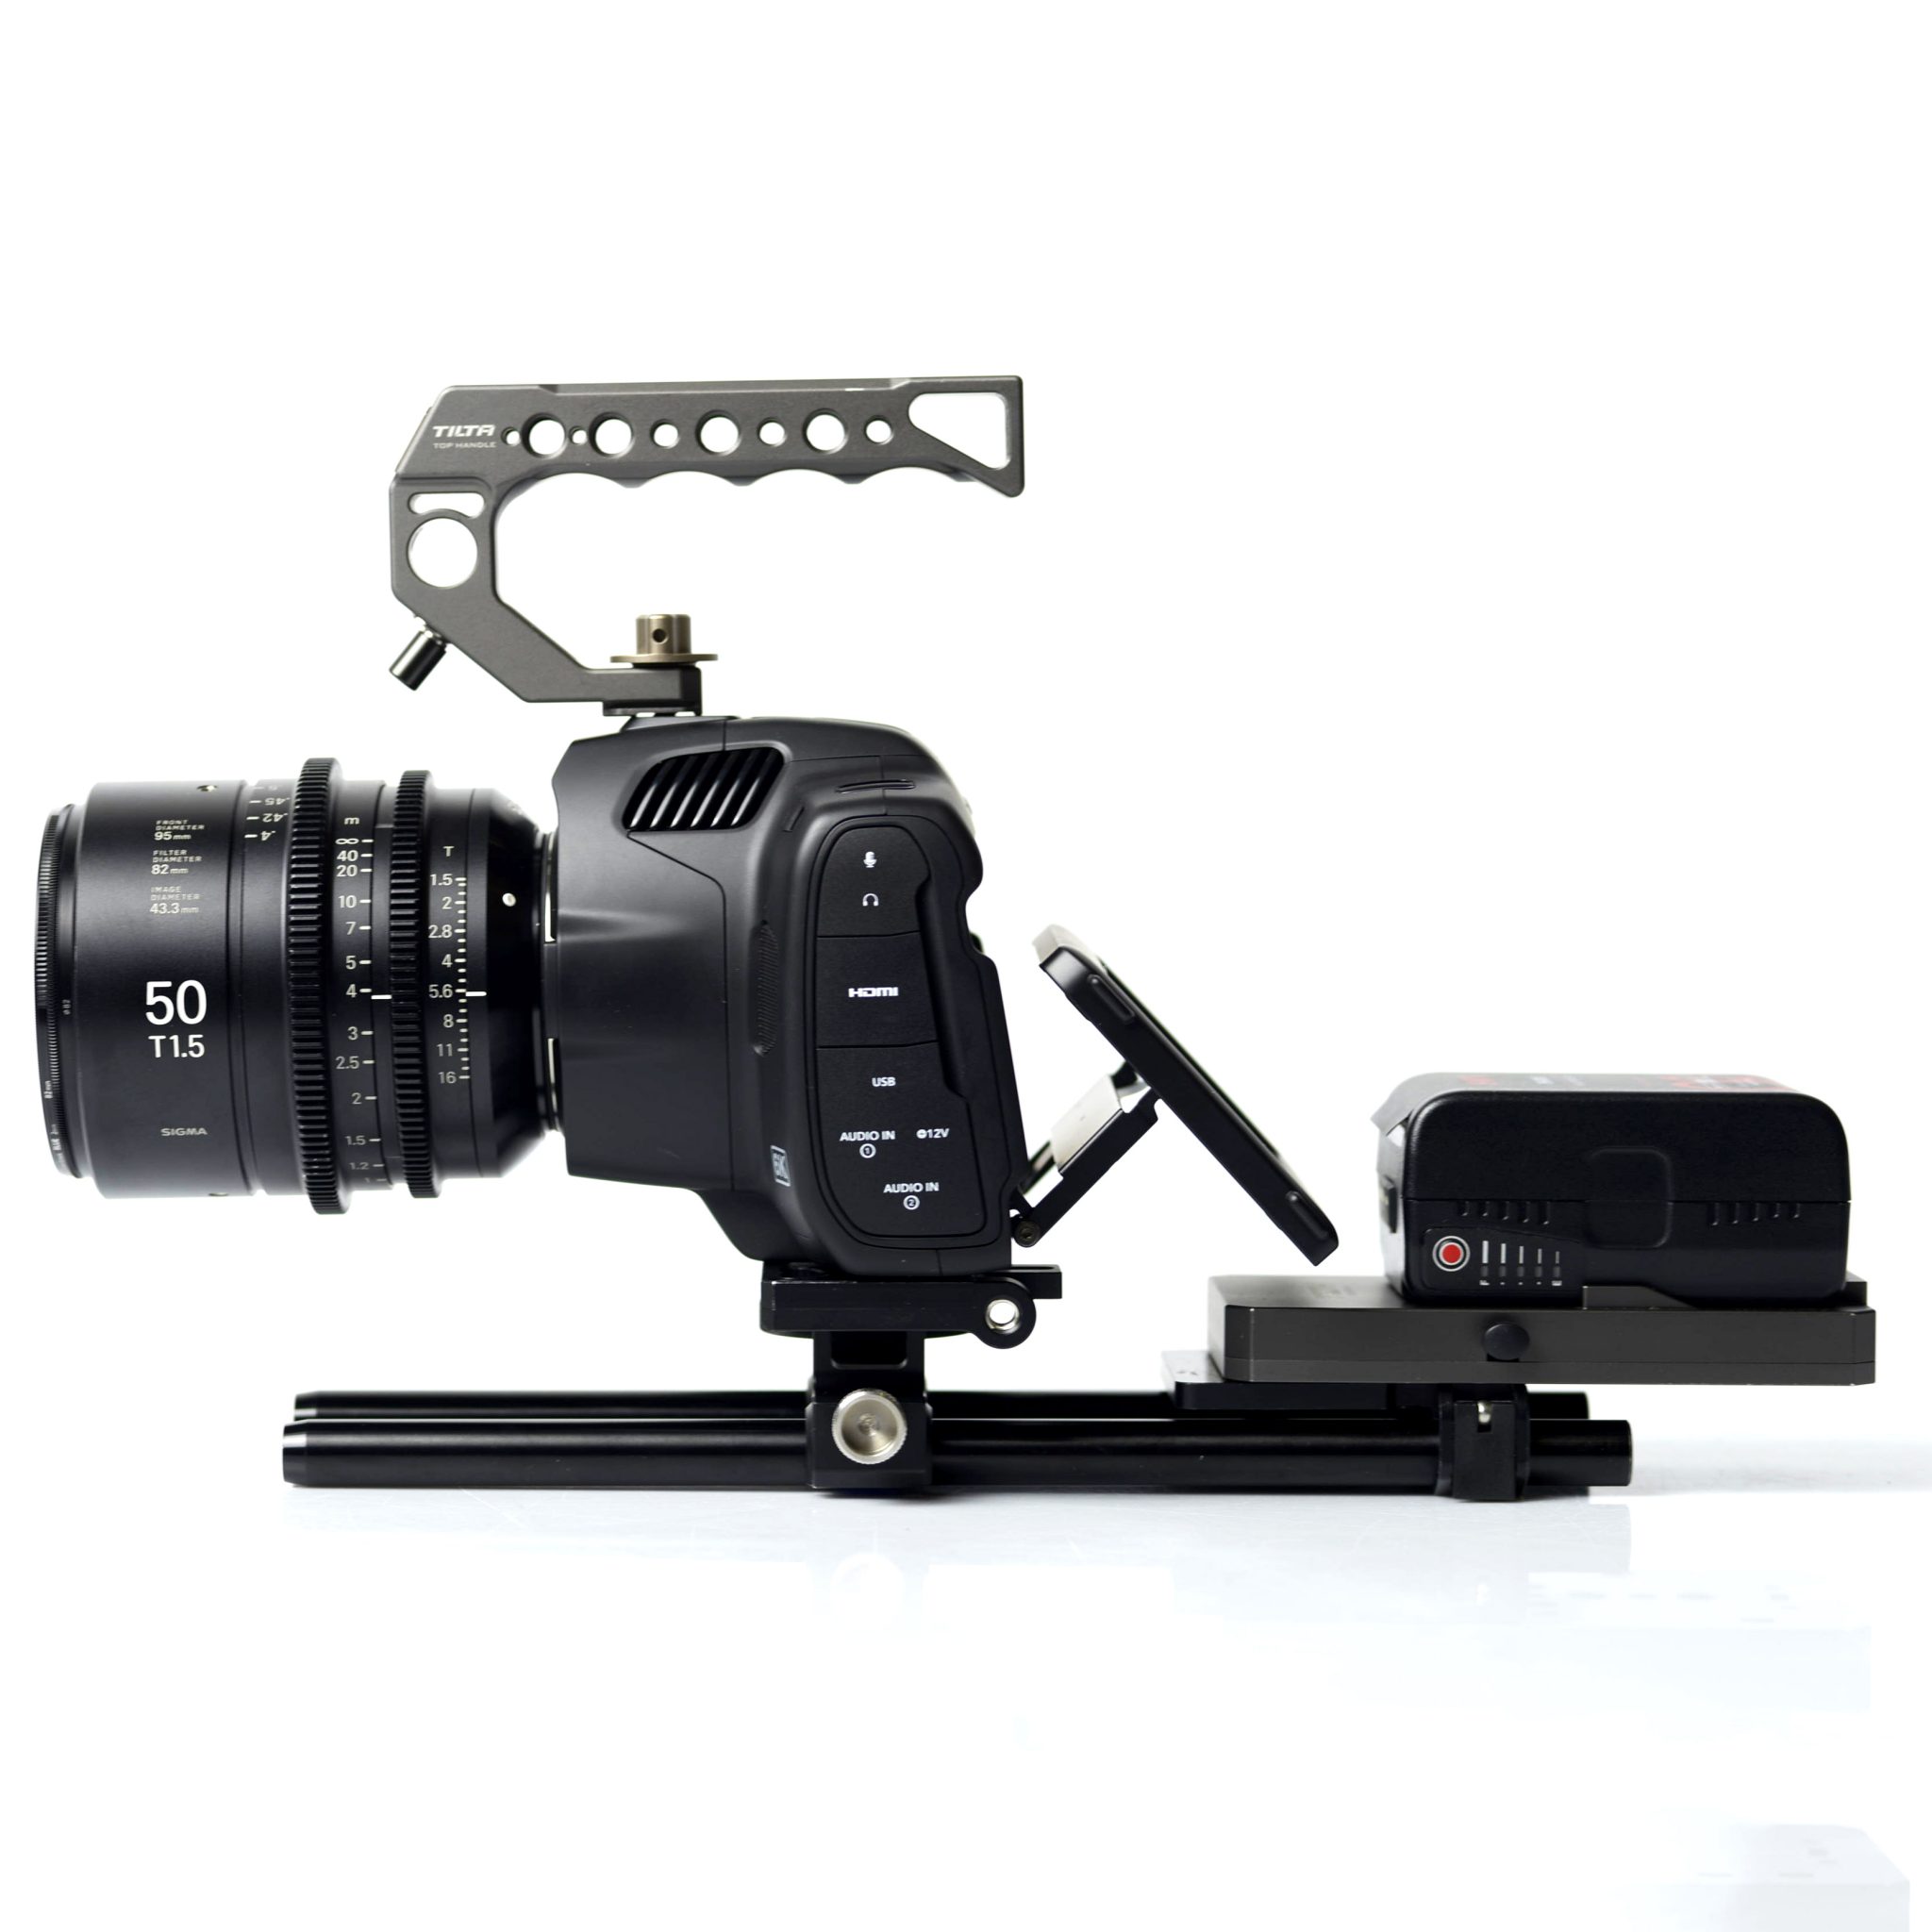 blackmagic pocket cinema camera 6k pro weight